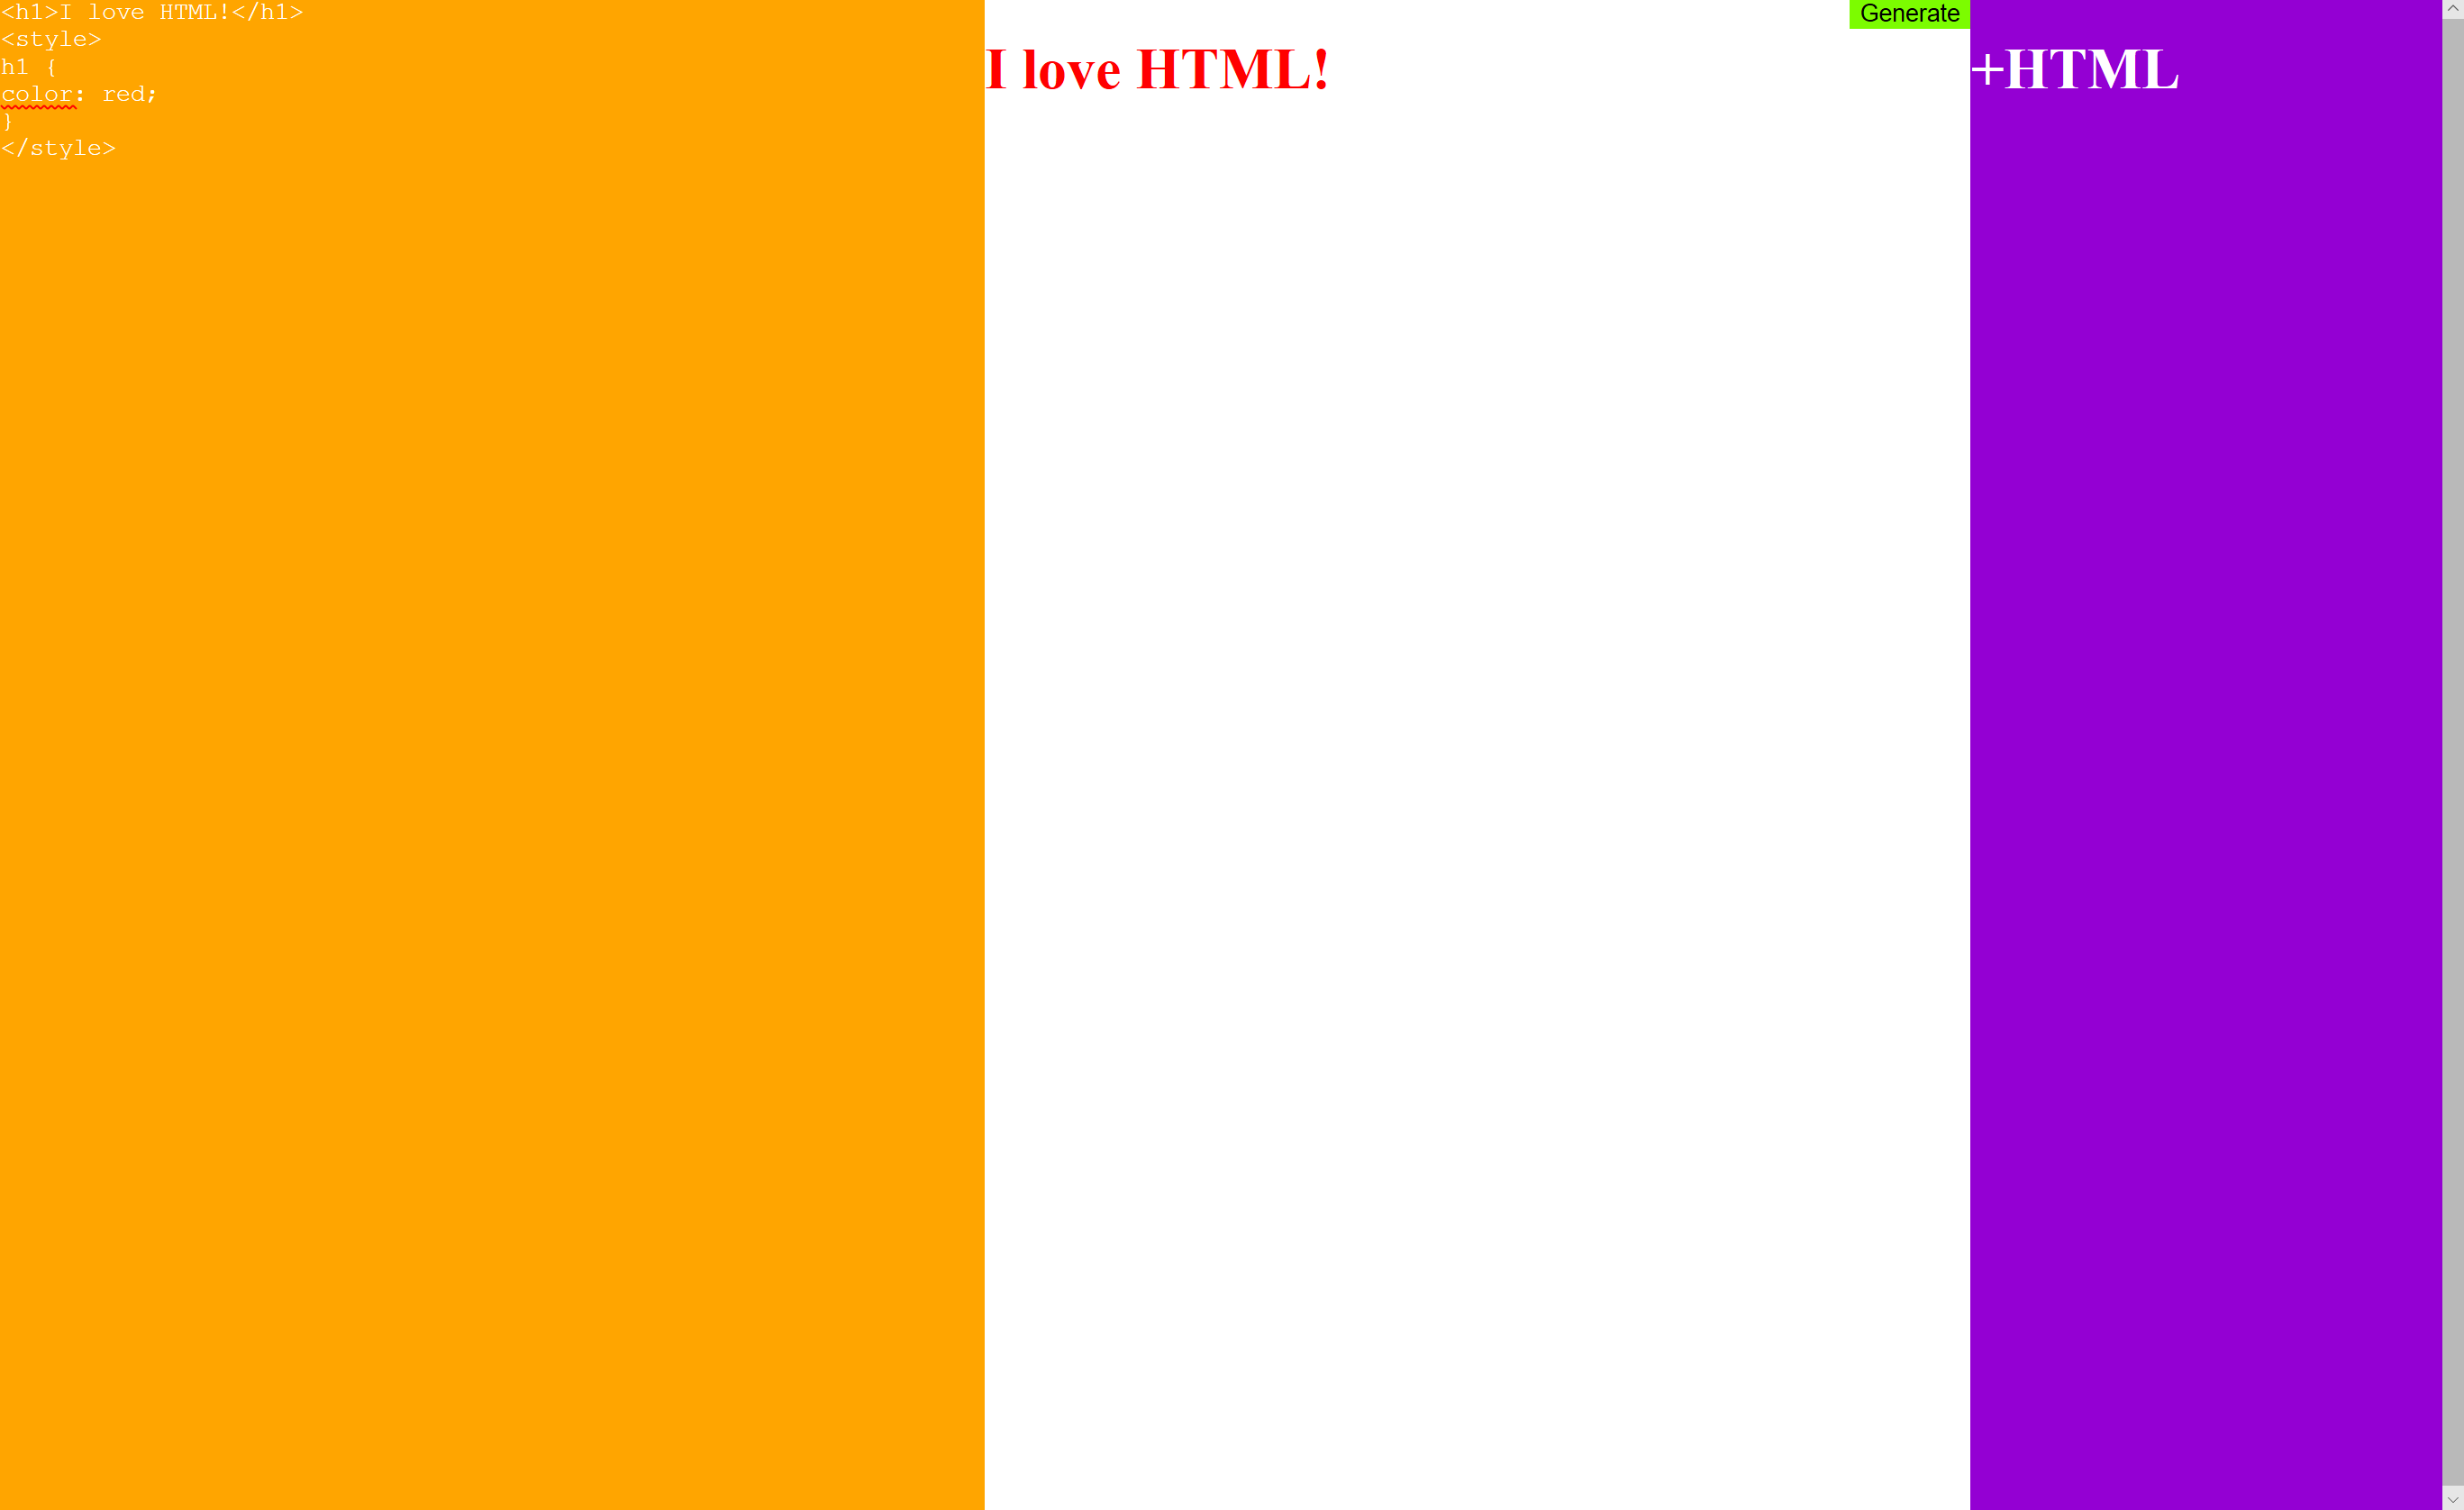 +HTML